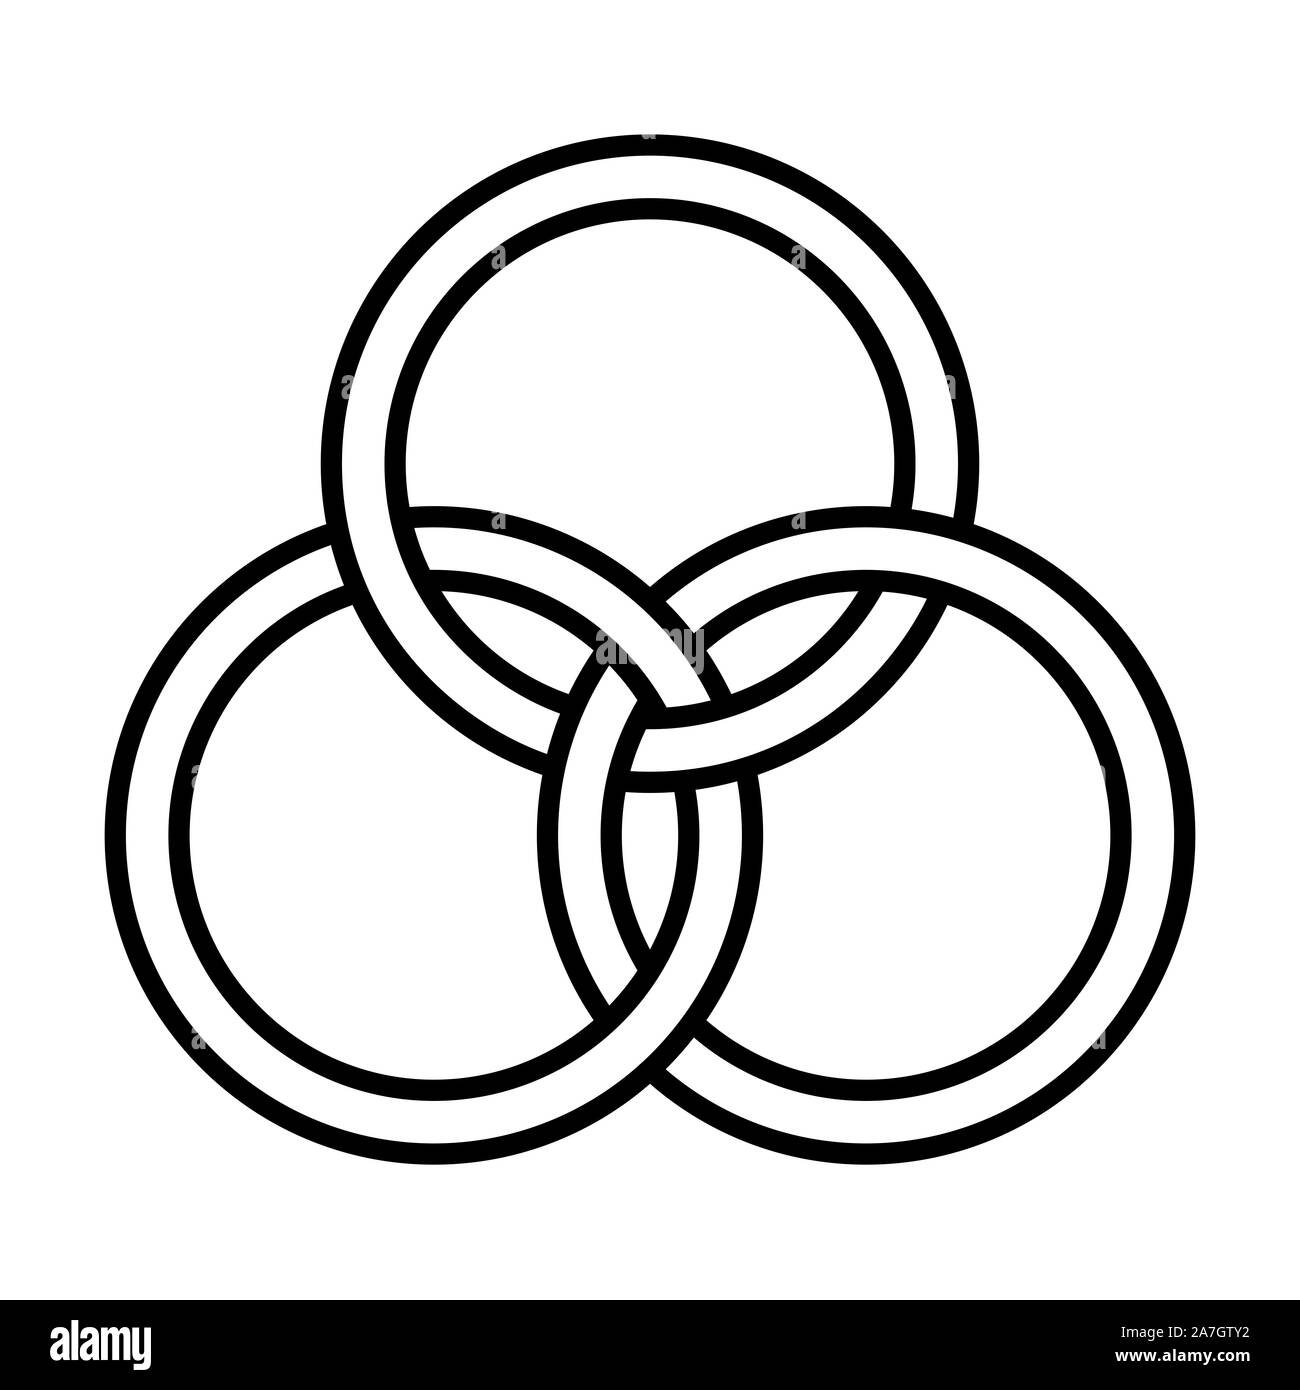 Borromean rings symbol Stock Photo - Alamy